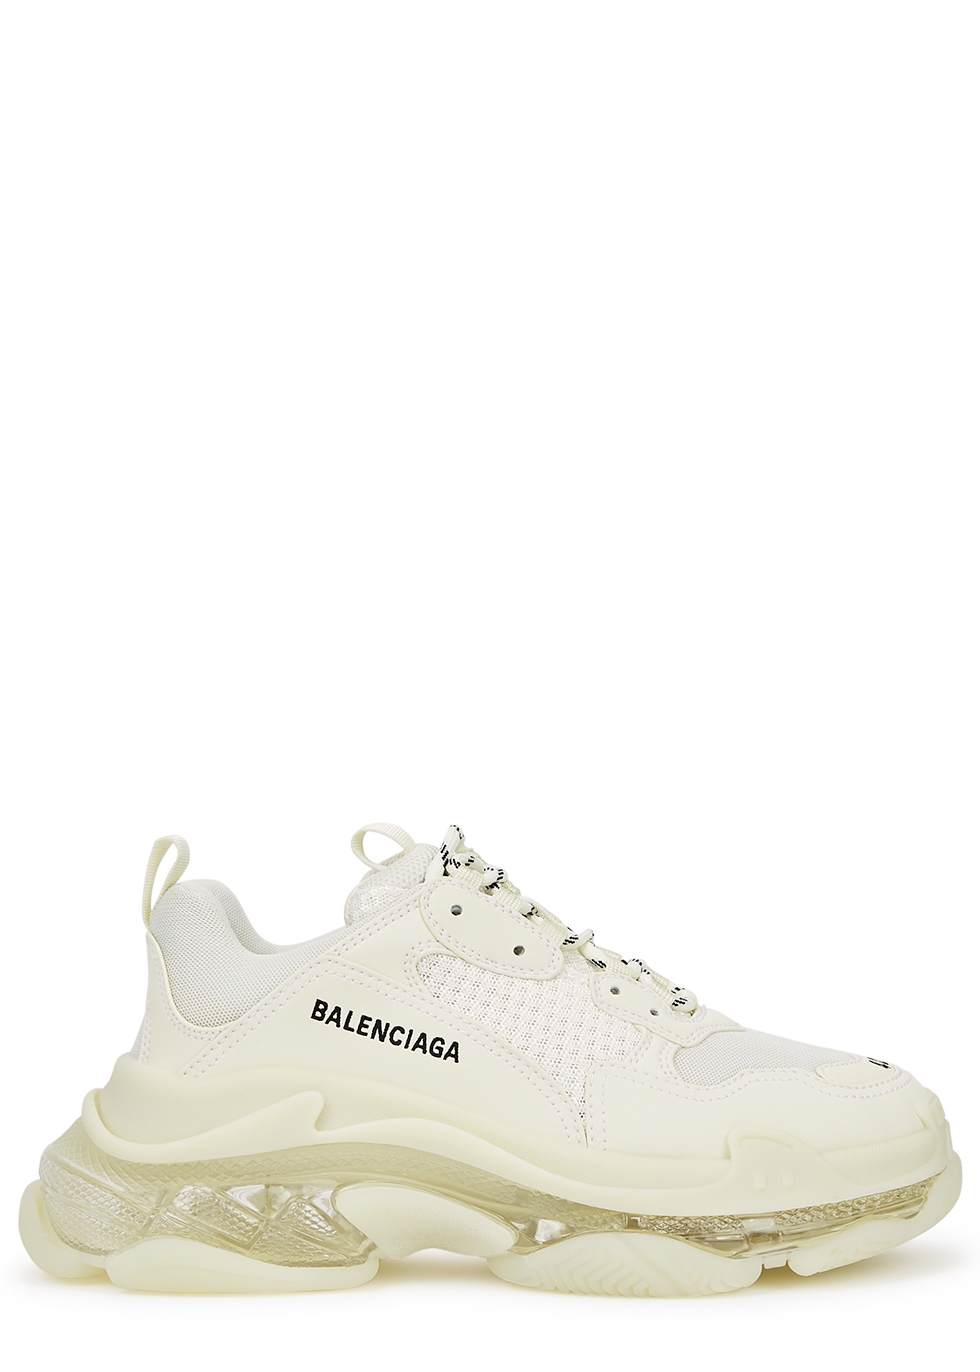 Balenciaga Women039s Off White Track Strap Sneakers Shoes Size 39 EU   eBay